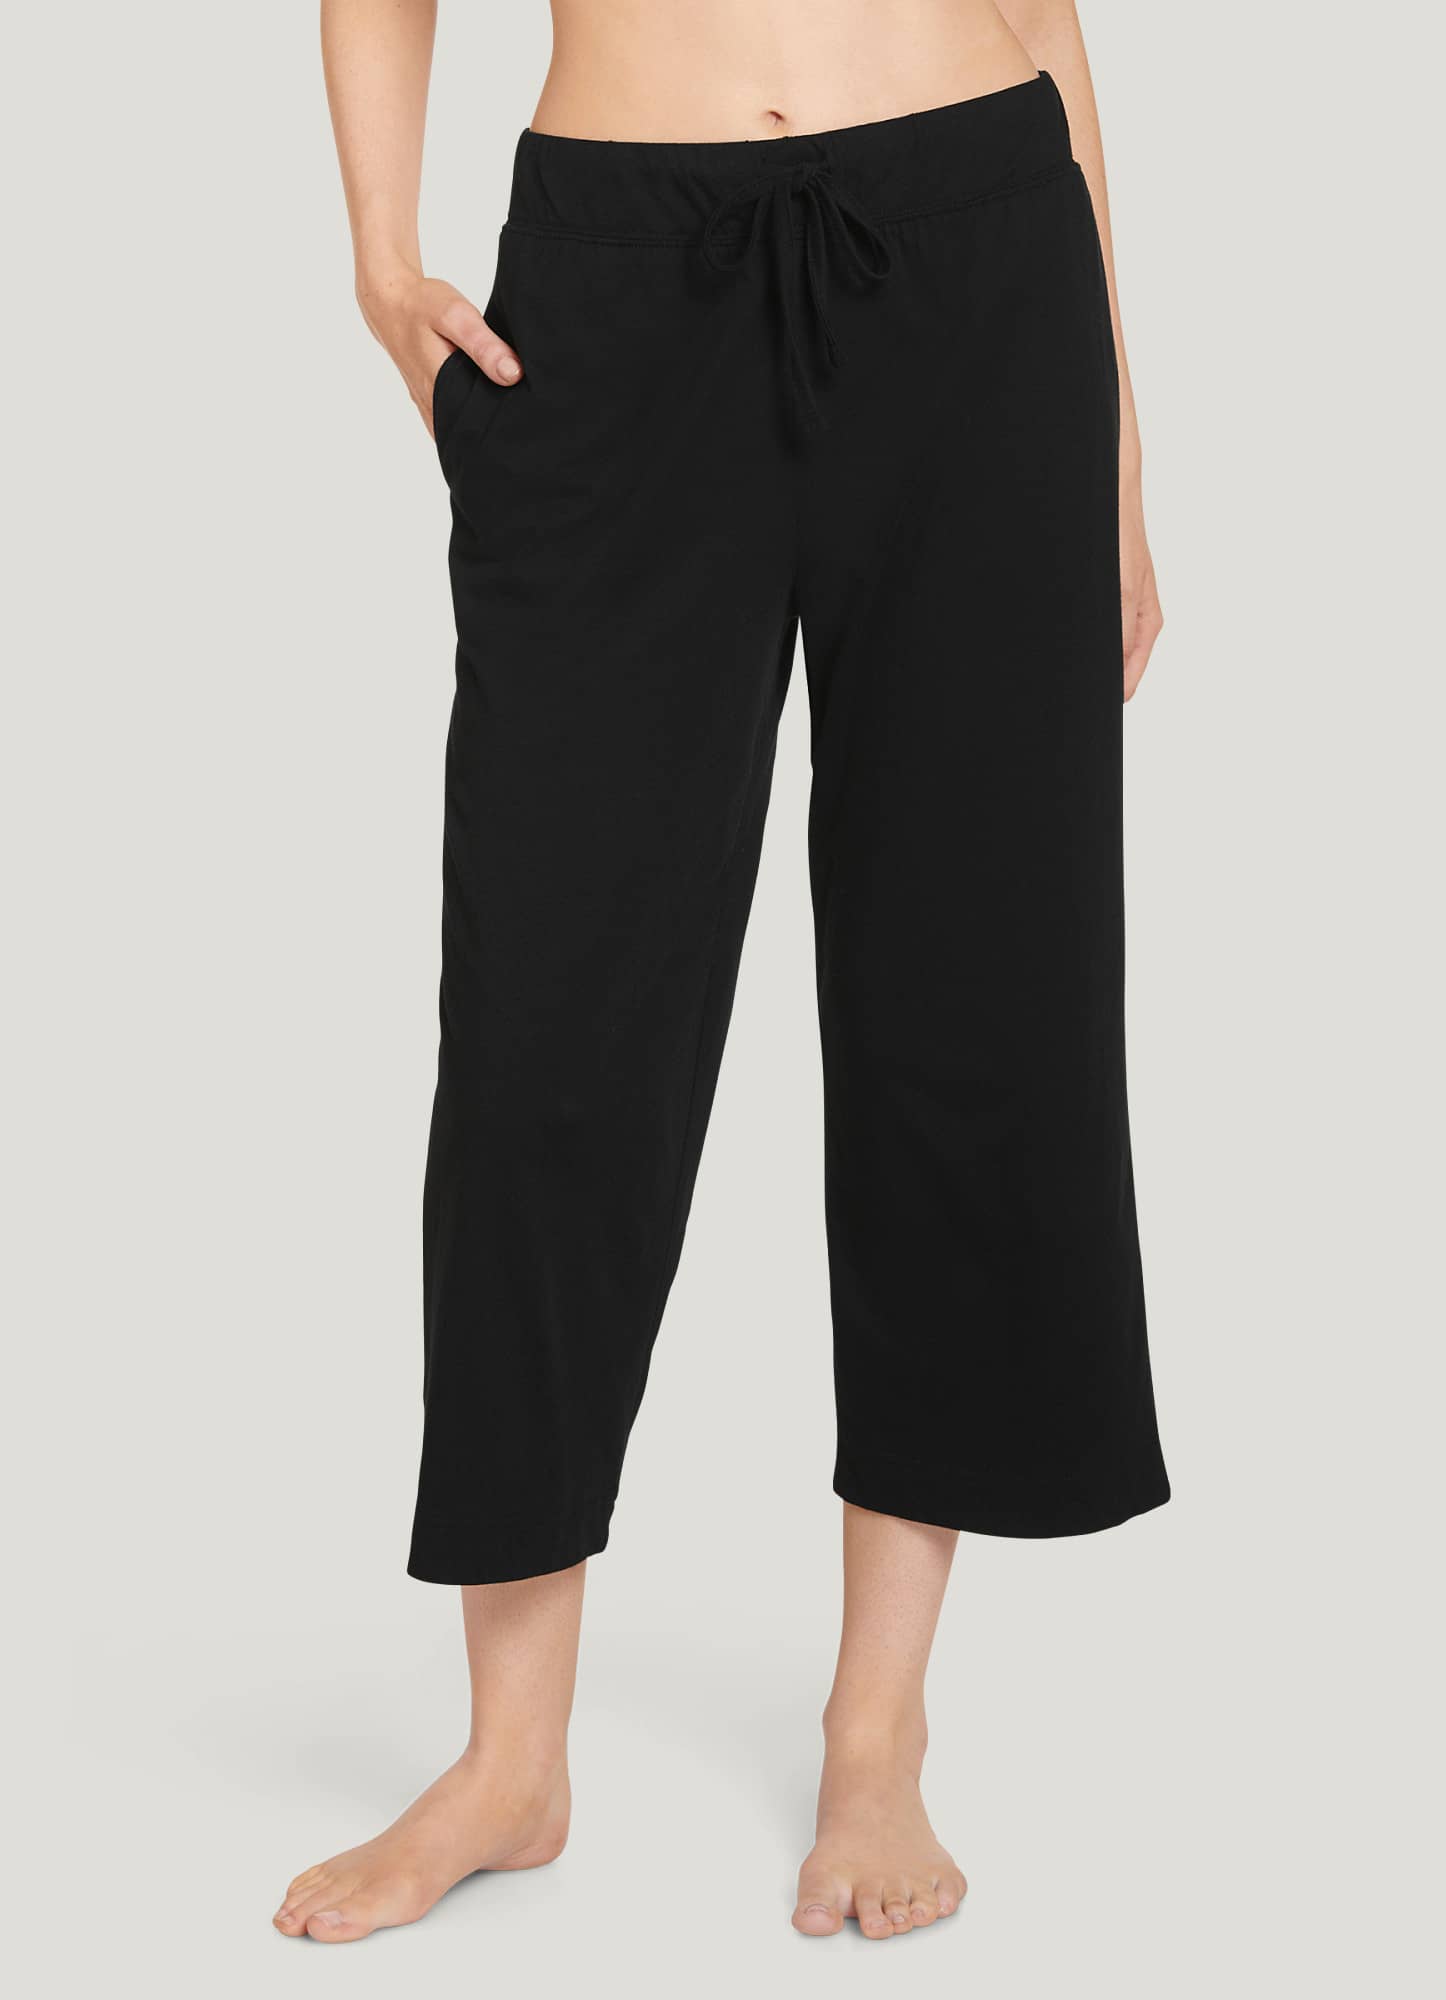 CATALOG CLASSICS Womens Capri Pants with pockets Elastic Waist Pants -  Black, 1X